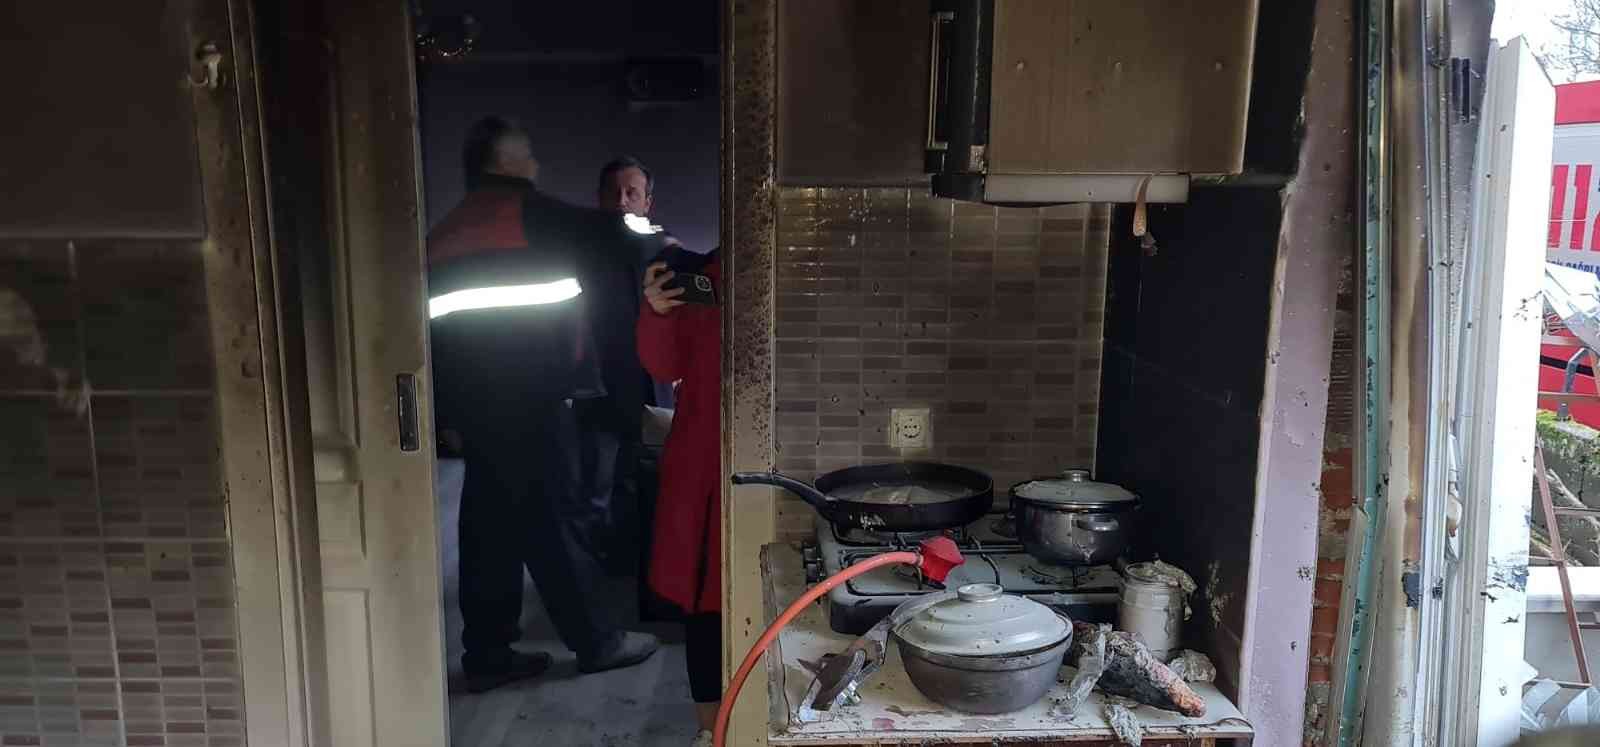 Mutfak tüpü patladı, ev alev alev yandı: 4 yaralı
